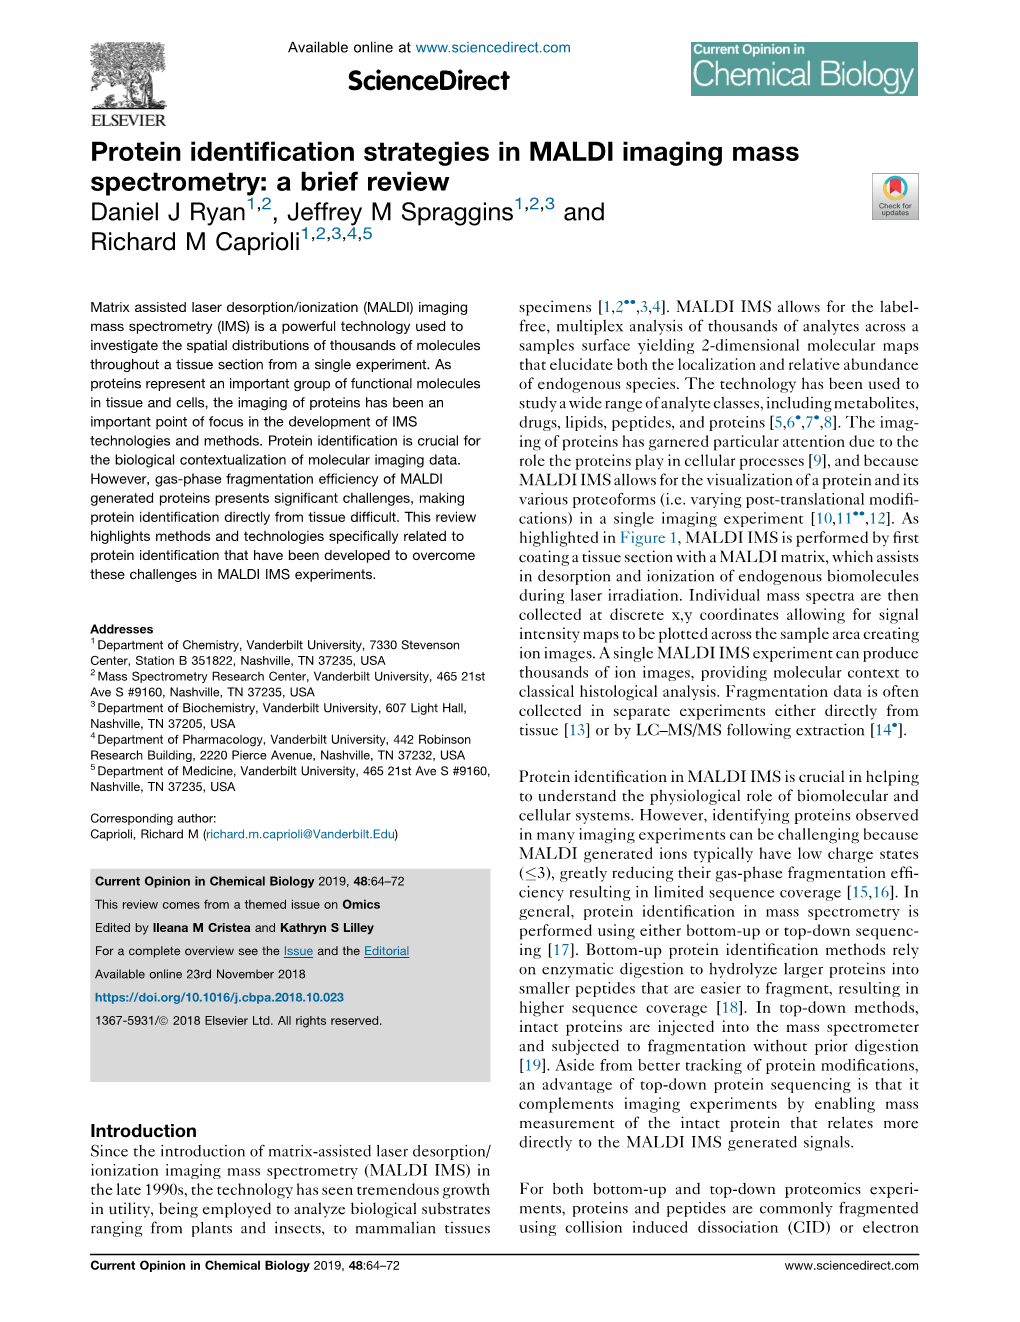 Protein Identification Strategies in MALDI Imaging Mass Spectrometry